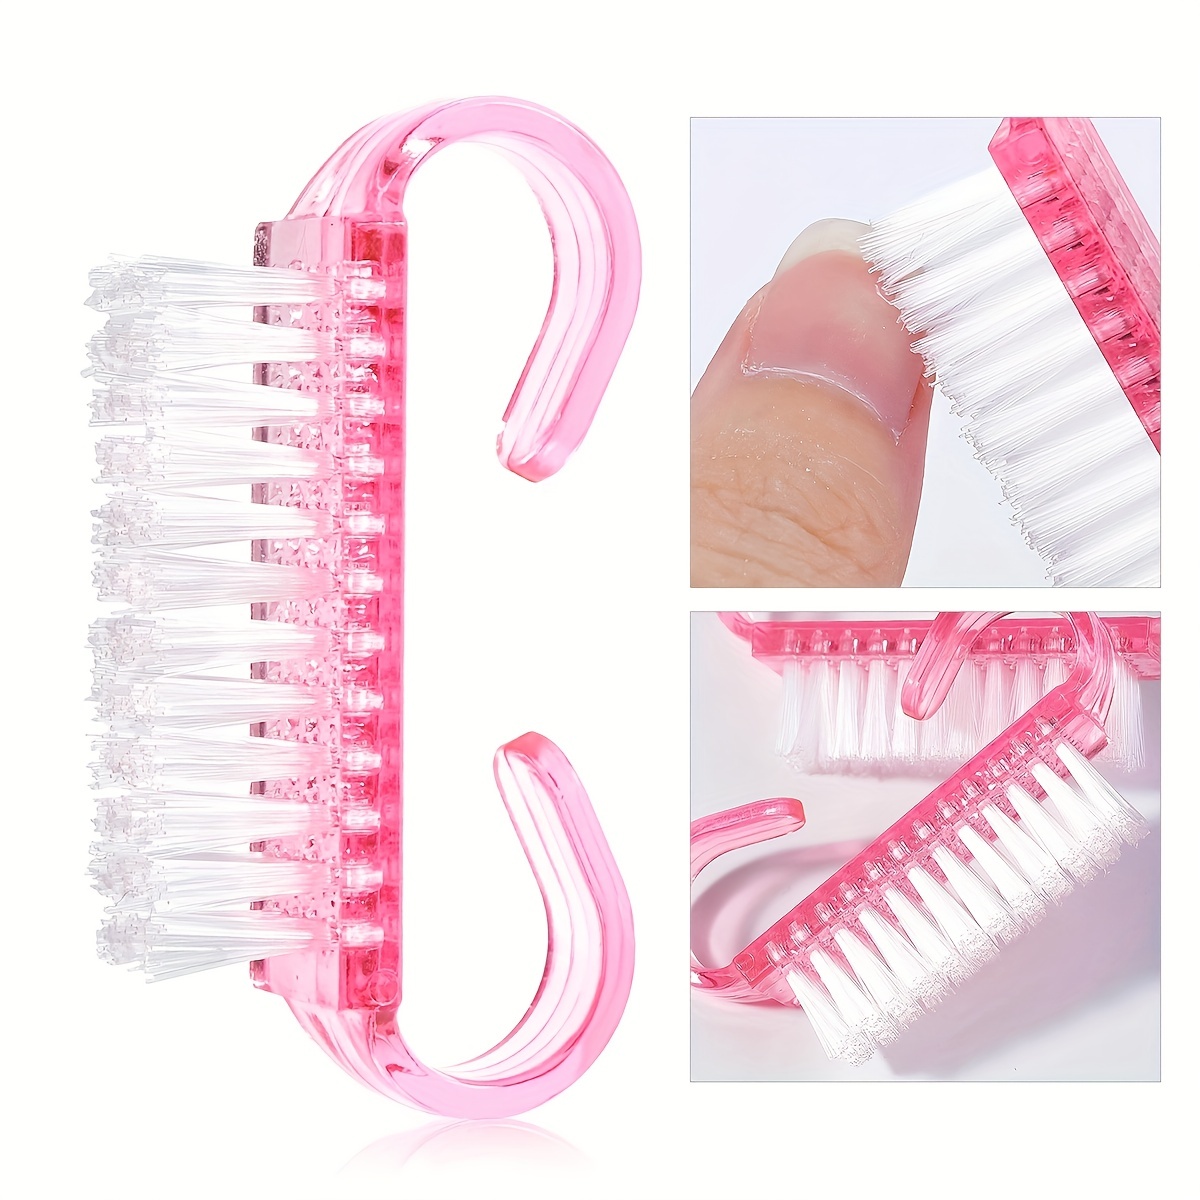 Handle Nail Brush Hand Fingernail Brush Cleaner Scrubbing Kit Pedicure For  Toes